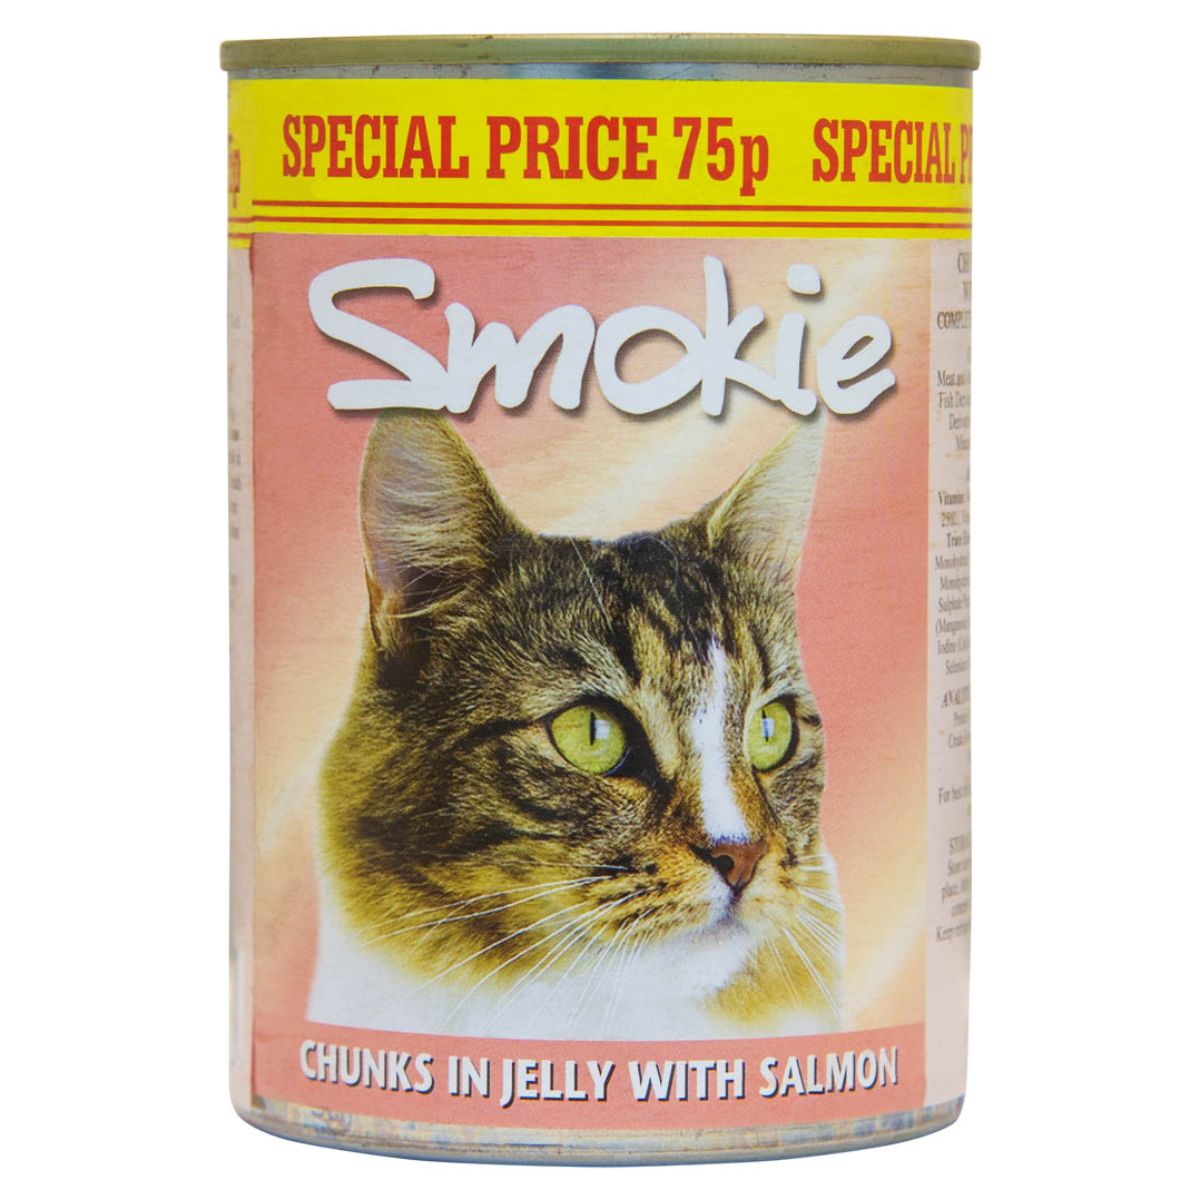 Smokie - Chunks in Jelly with Salmon - 400g cat food.